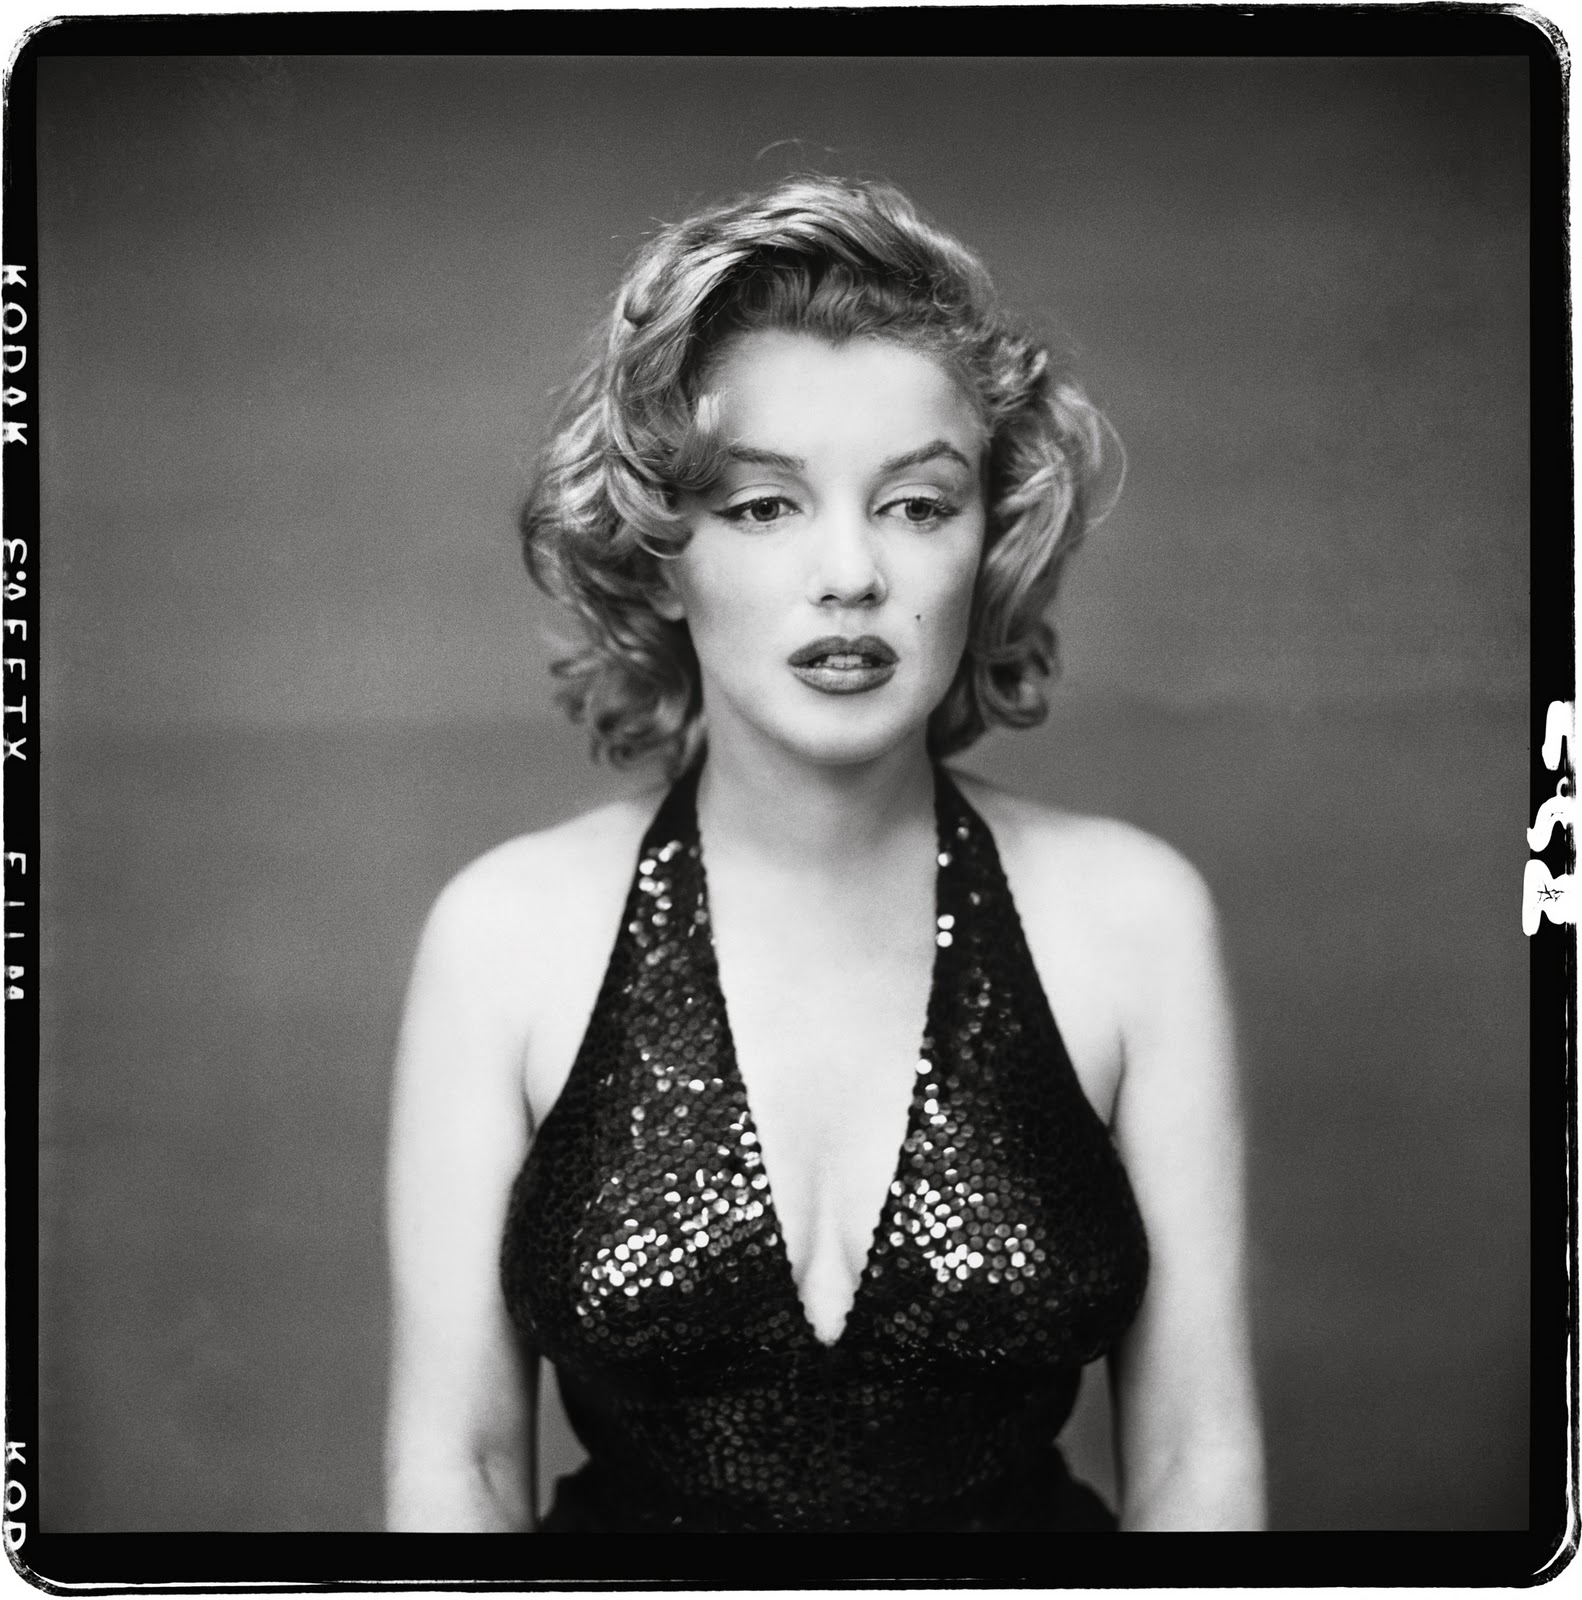 http://1.bp.blogspot.com/_OAh4Xl94vrU/TKNL3AUbIiI/AAAAAAAAYGI/fz10q3sjXiI/s1600/Marilyn+Monroe,+actor,+New+York,+May+6,+1957.jpg